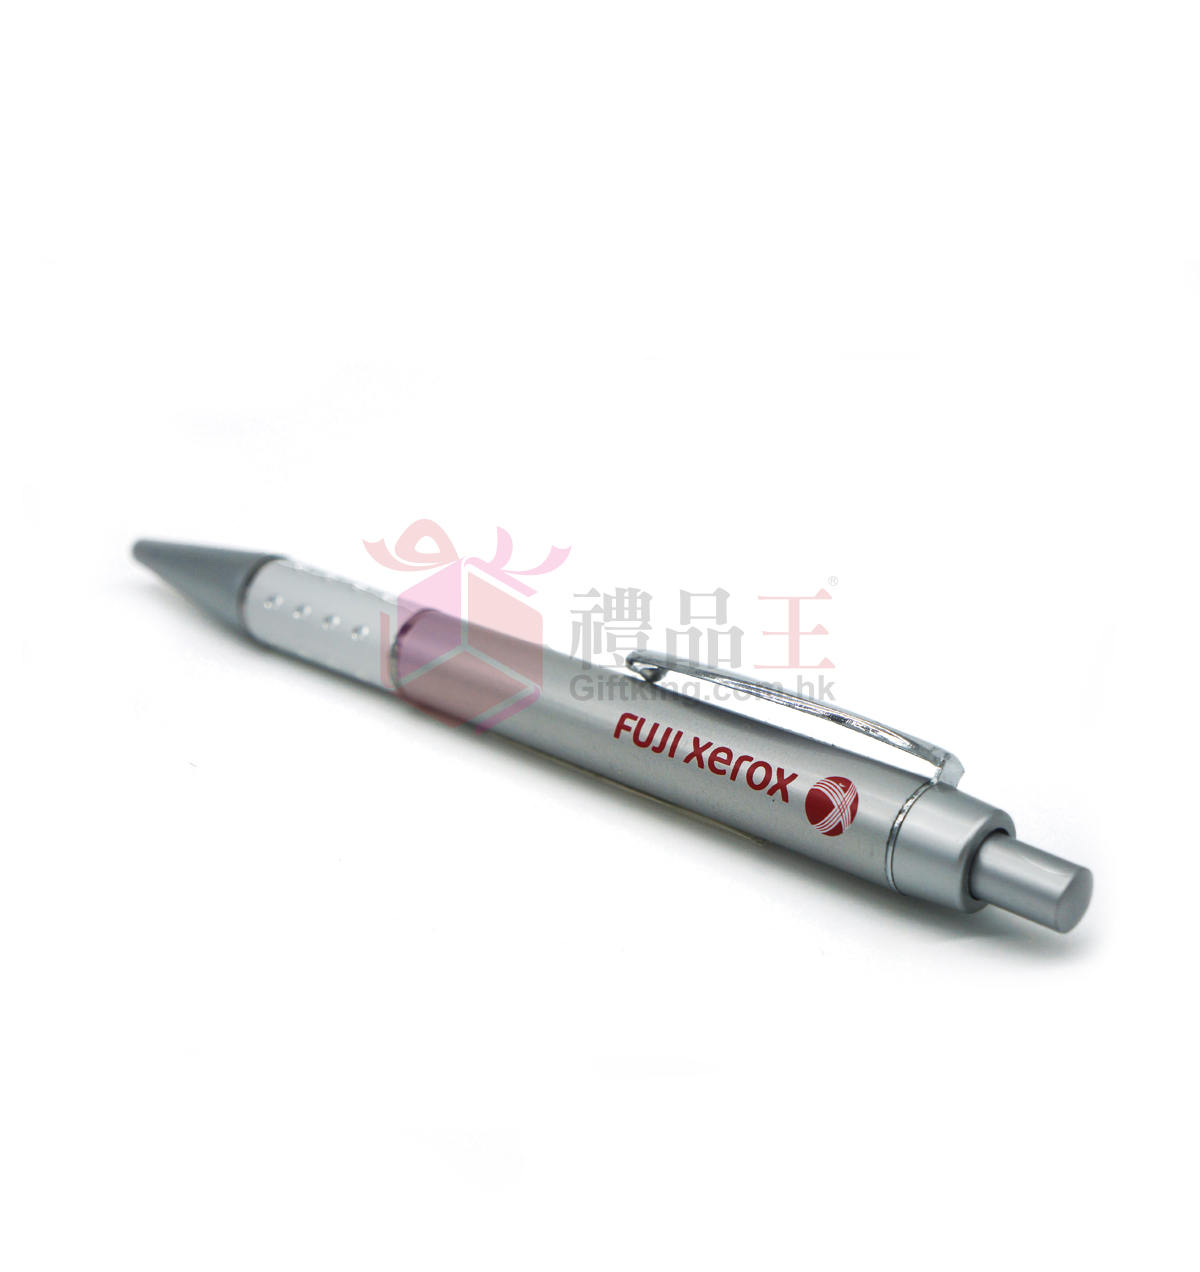 Fuji Xerox pen (Stationery gift)